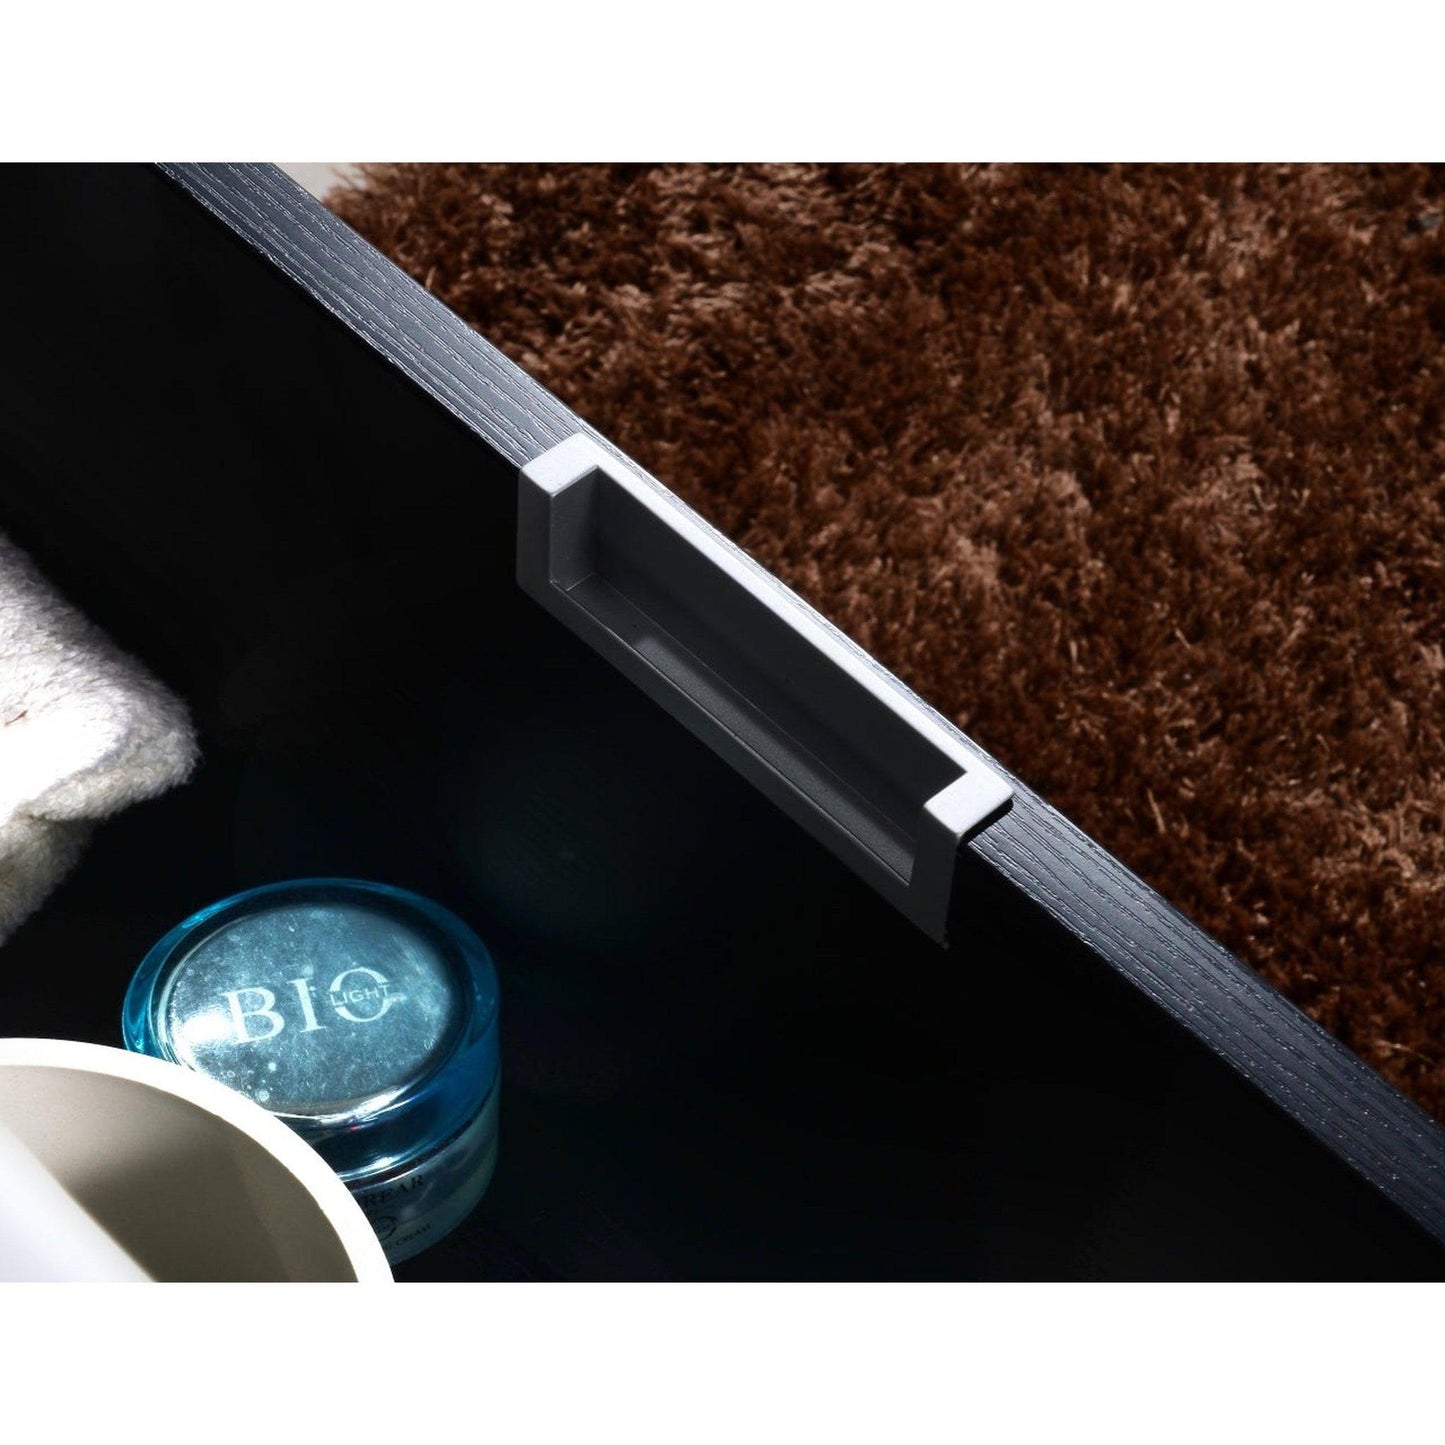 KubeBath Bliss 40" Black Wall-Mounted Modern Bathroom Vanity With Single Integrated Acrylic Sink With Overflow